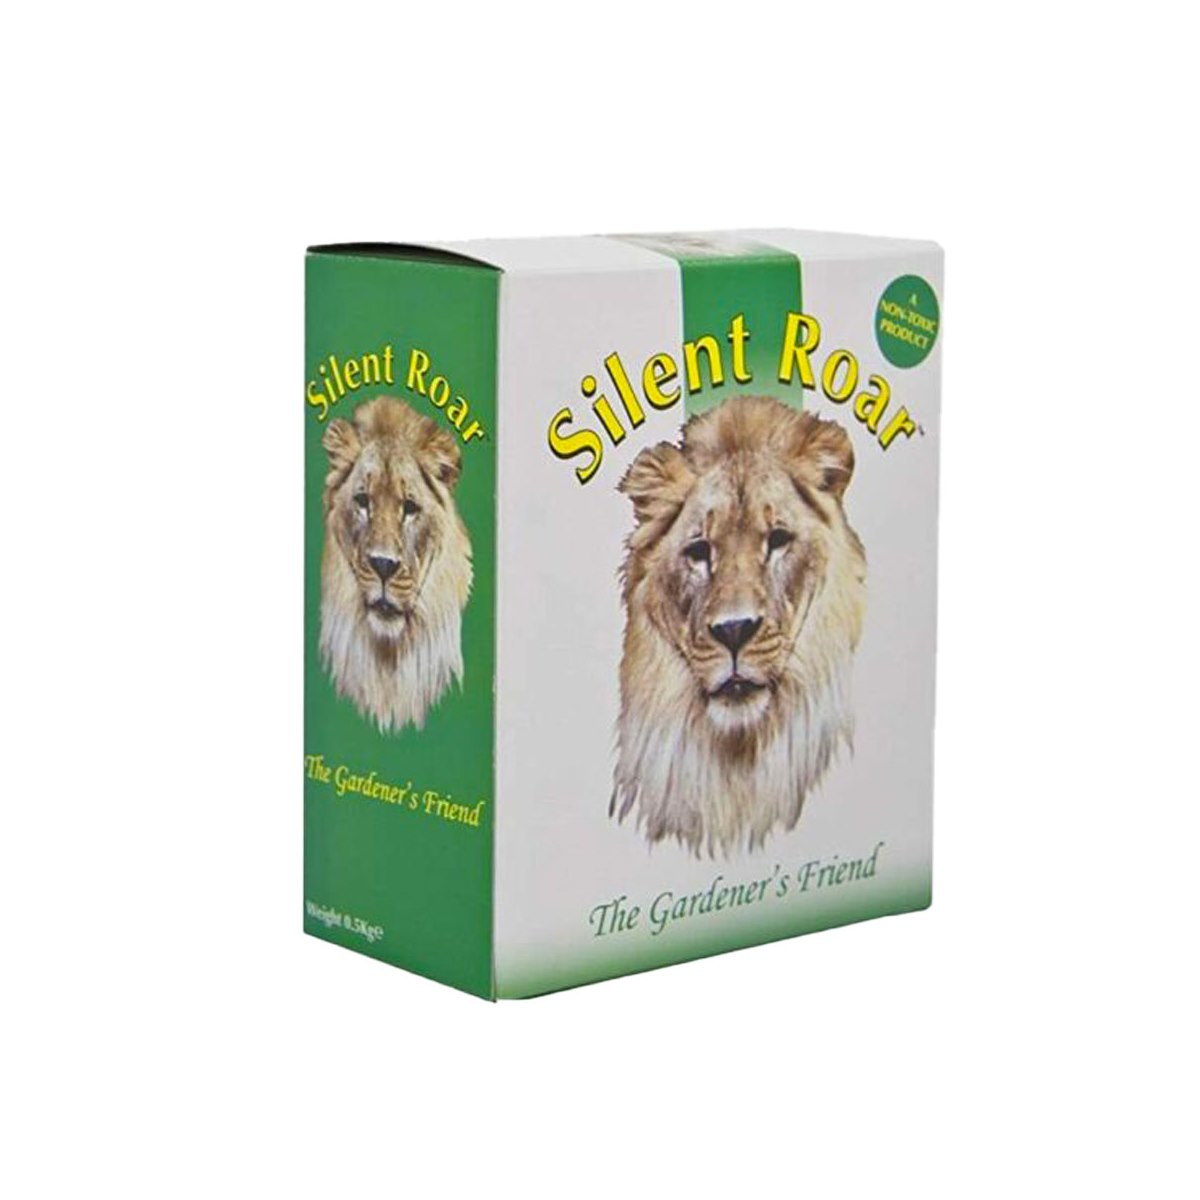 Silent Roar Cat Repeller Lion Manure Pellets Fertiliser 500g